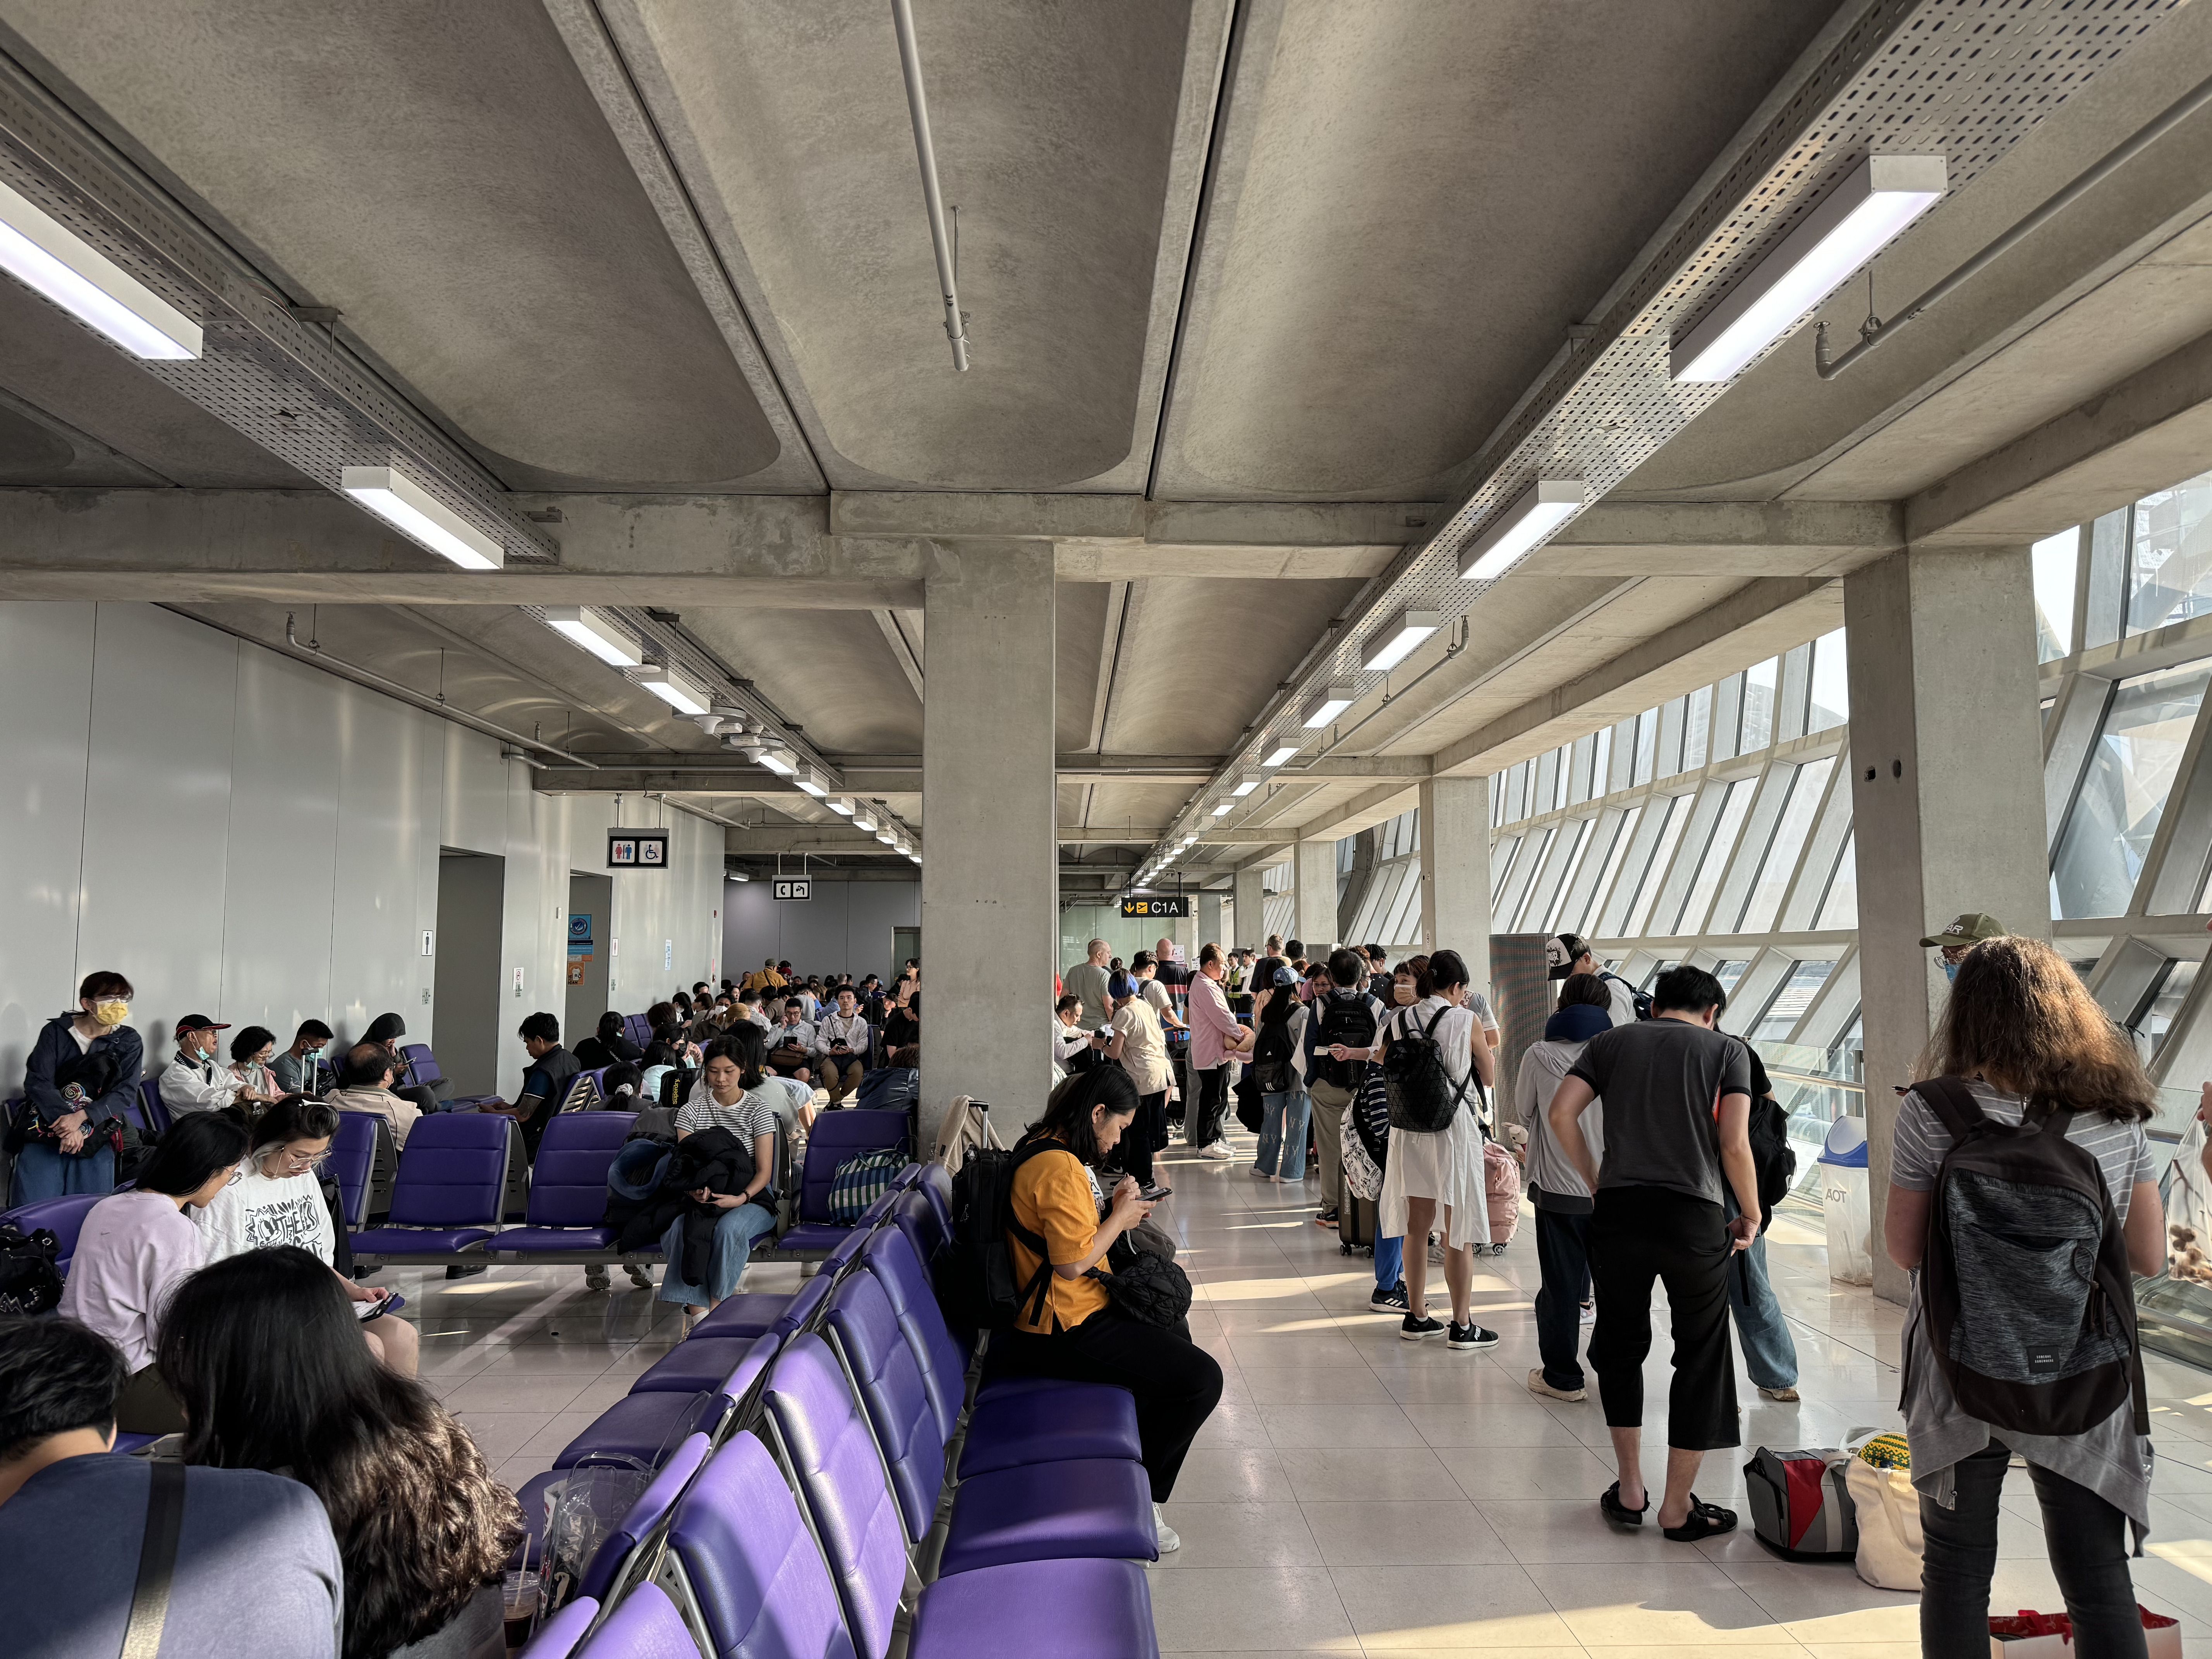 A departure lounge area at Bangkok Airport.